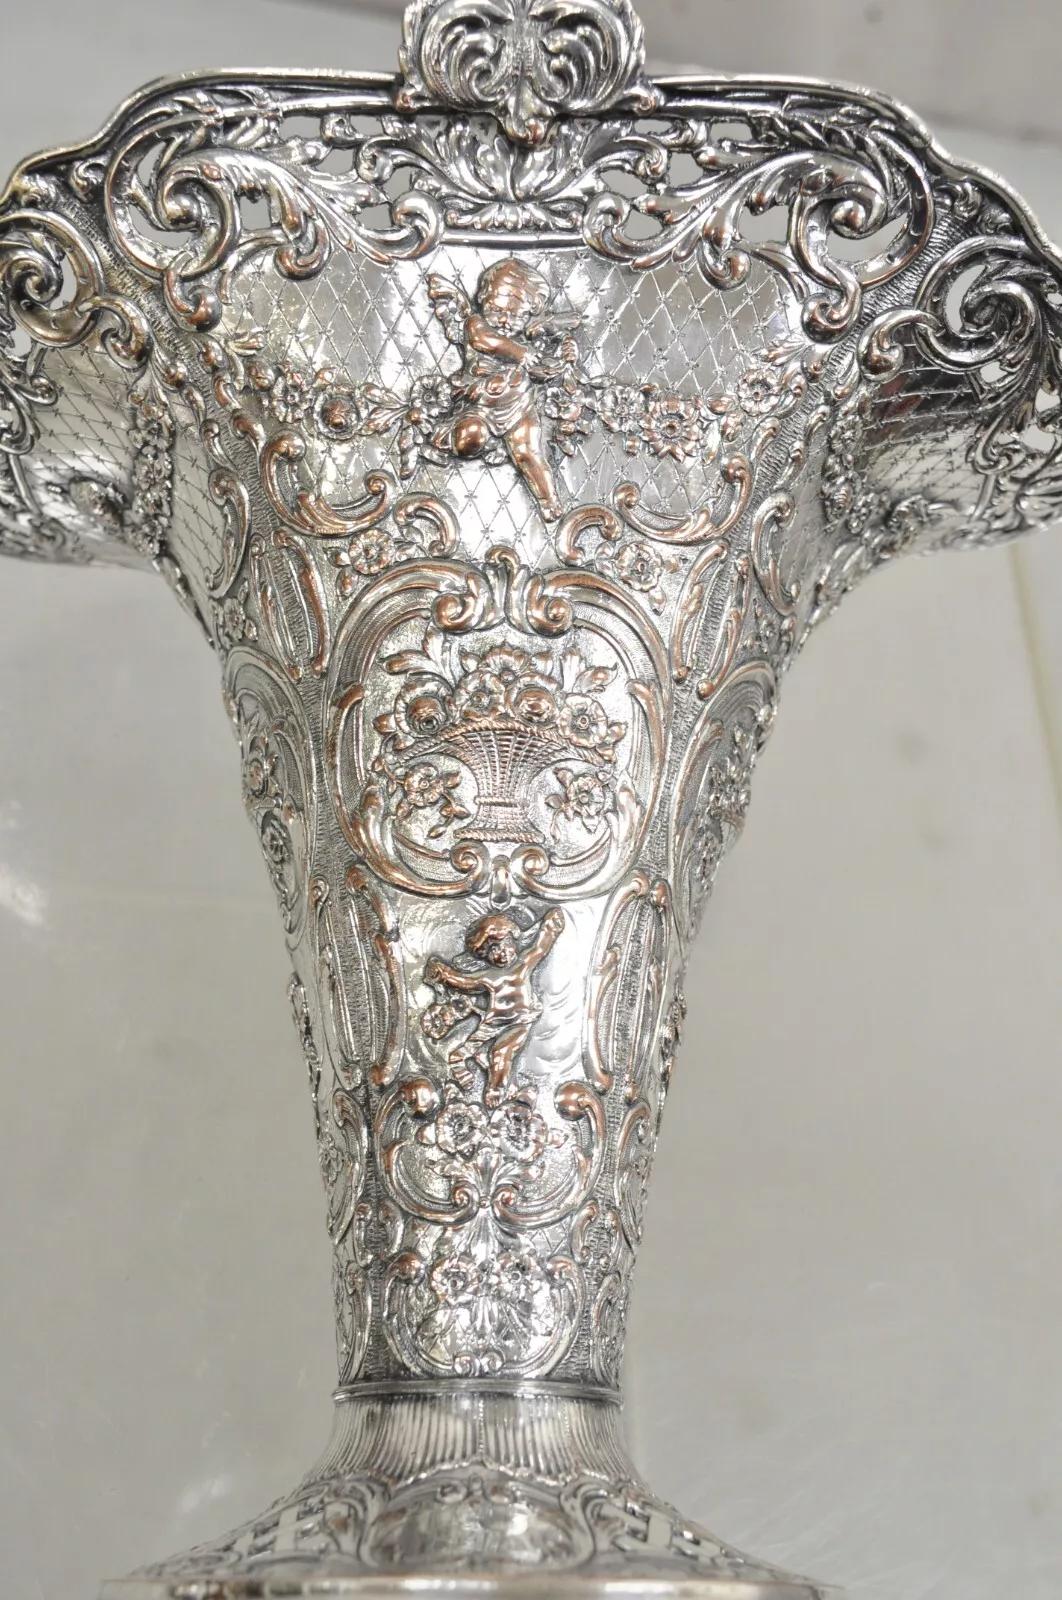 Antique English Victorian Repousse Silver Plated Cherub Vase Brides Basket. Item features ornate cherub scrollwork and floral bouquet repousse, 